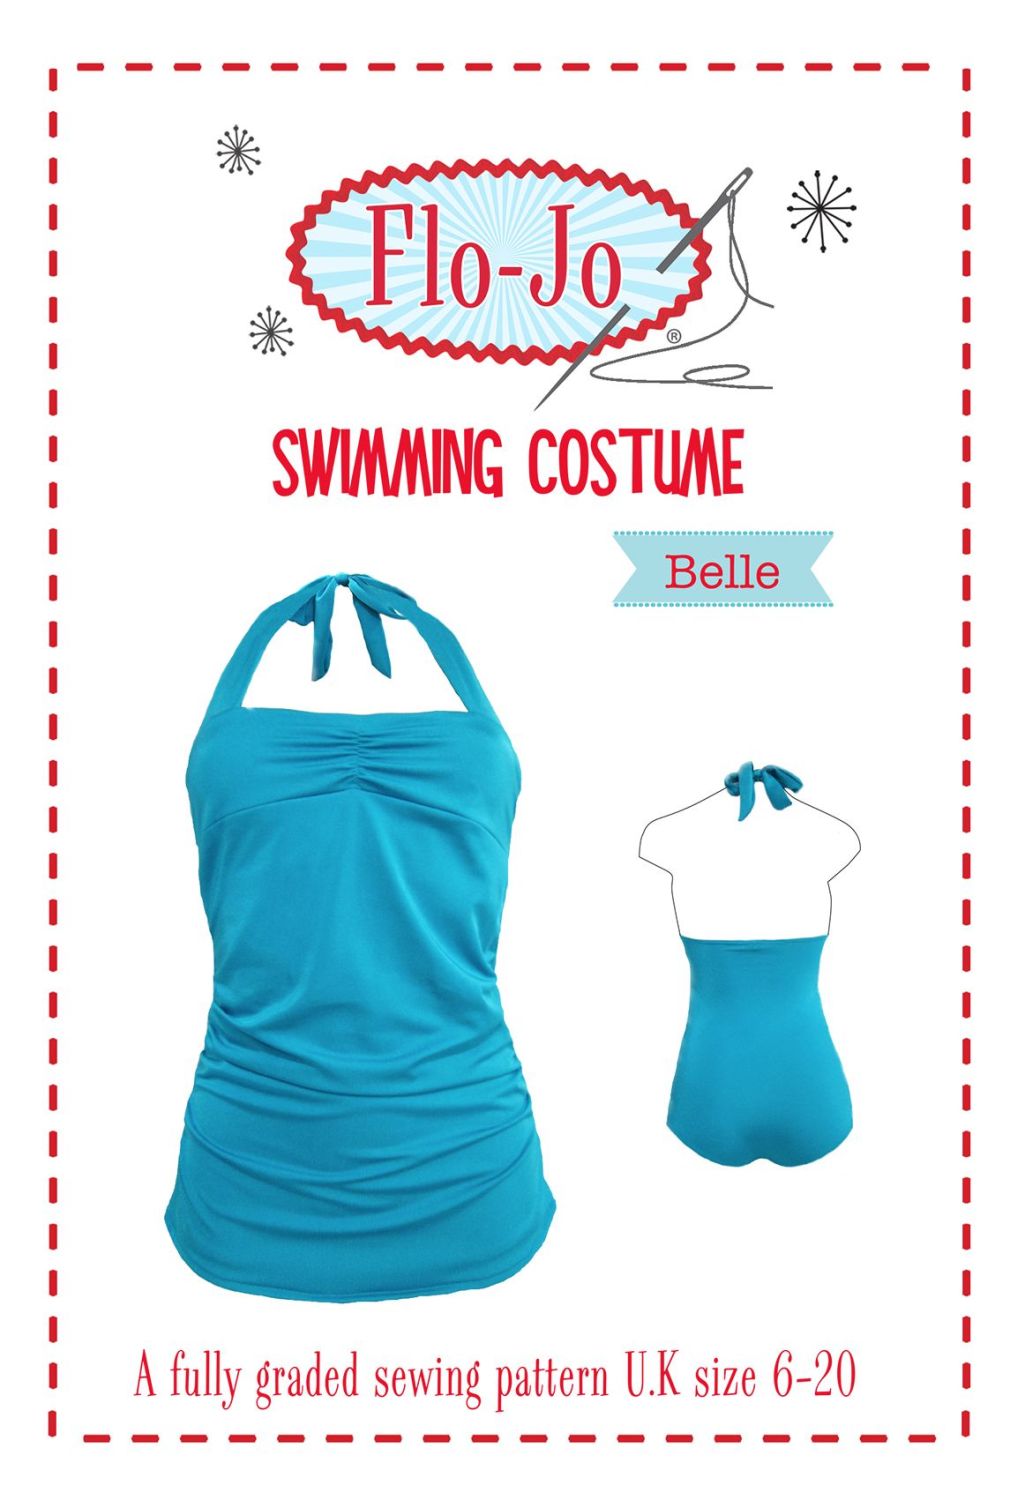 Belle Swimming Costume